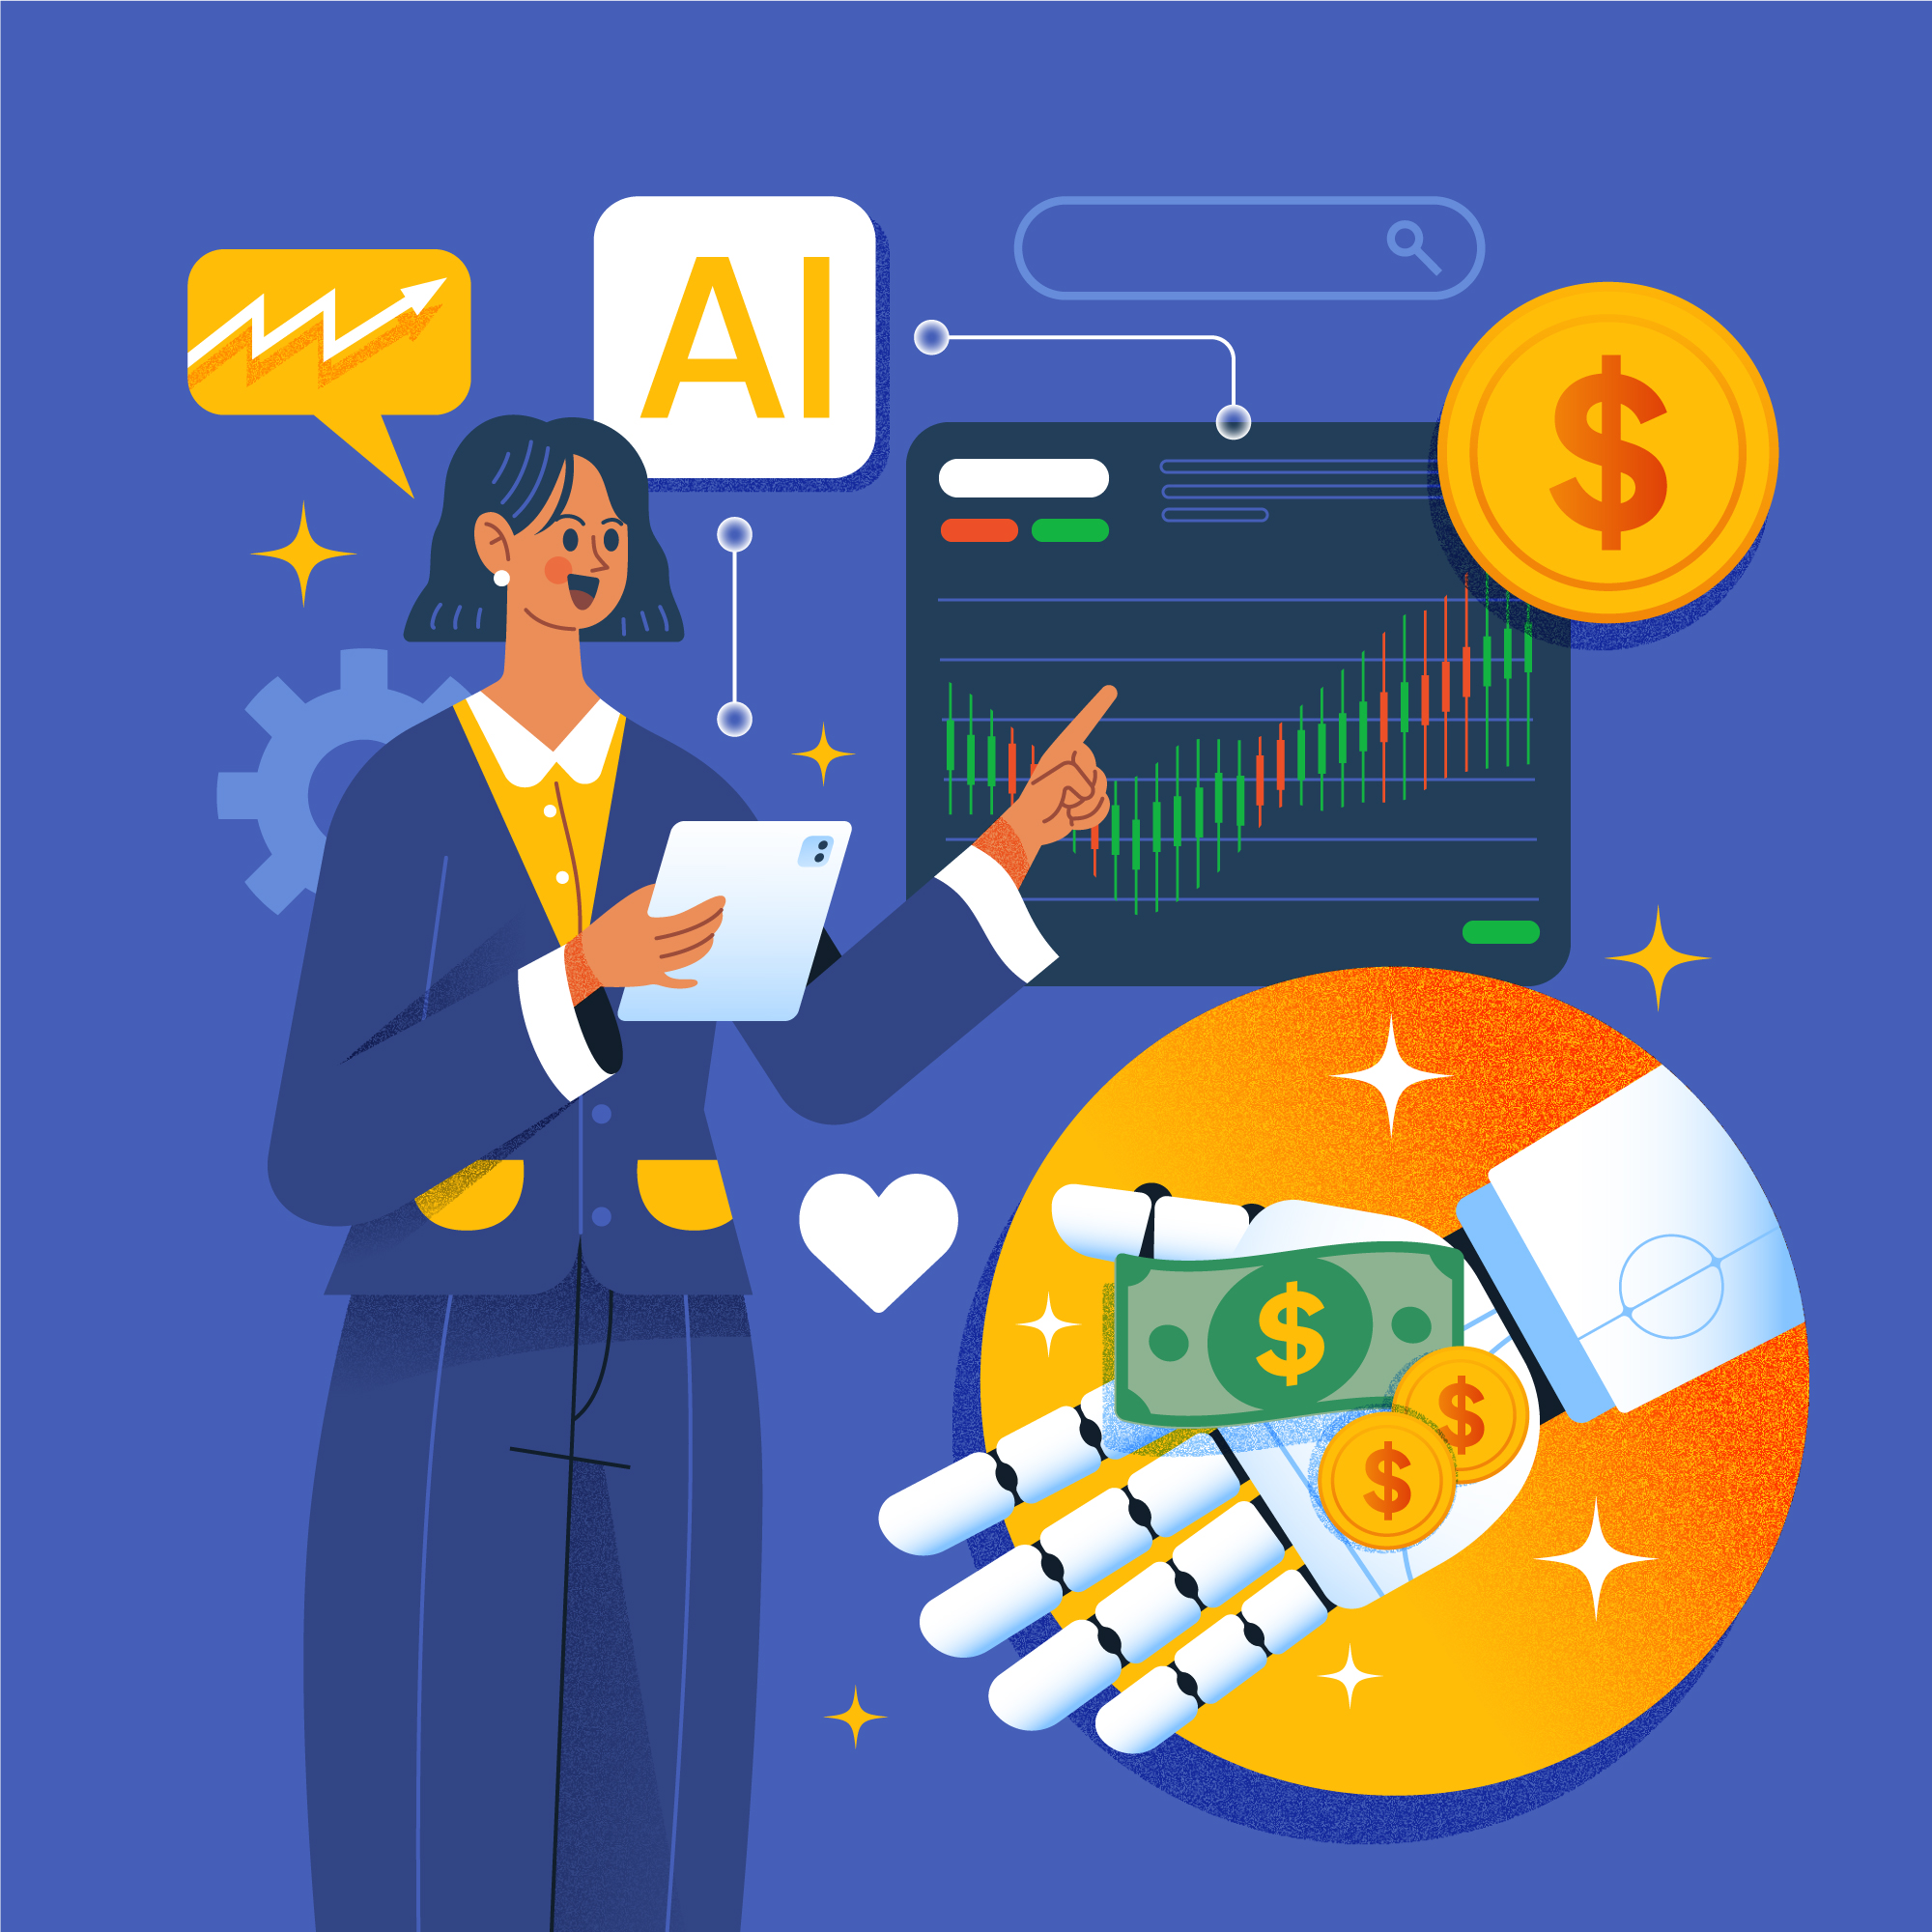 AI marketing tools